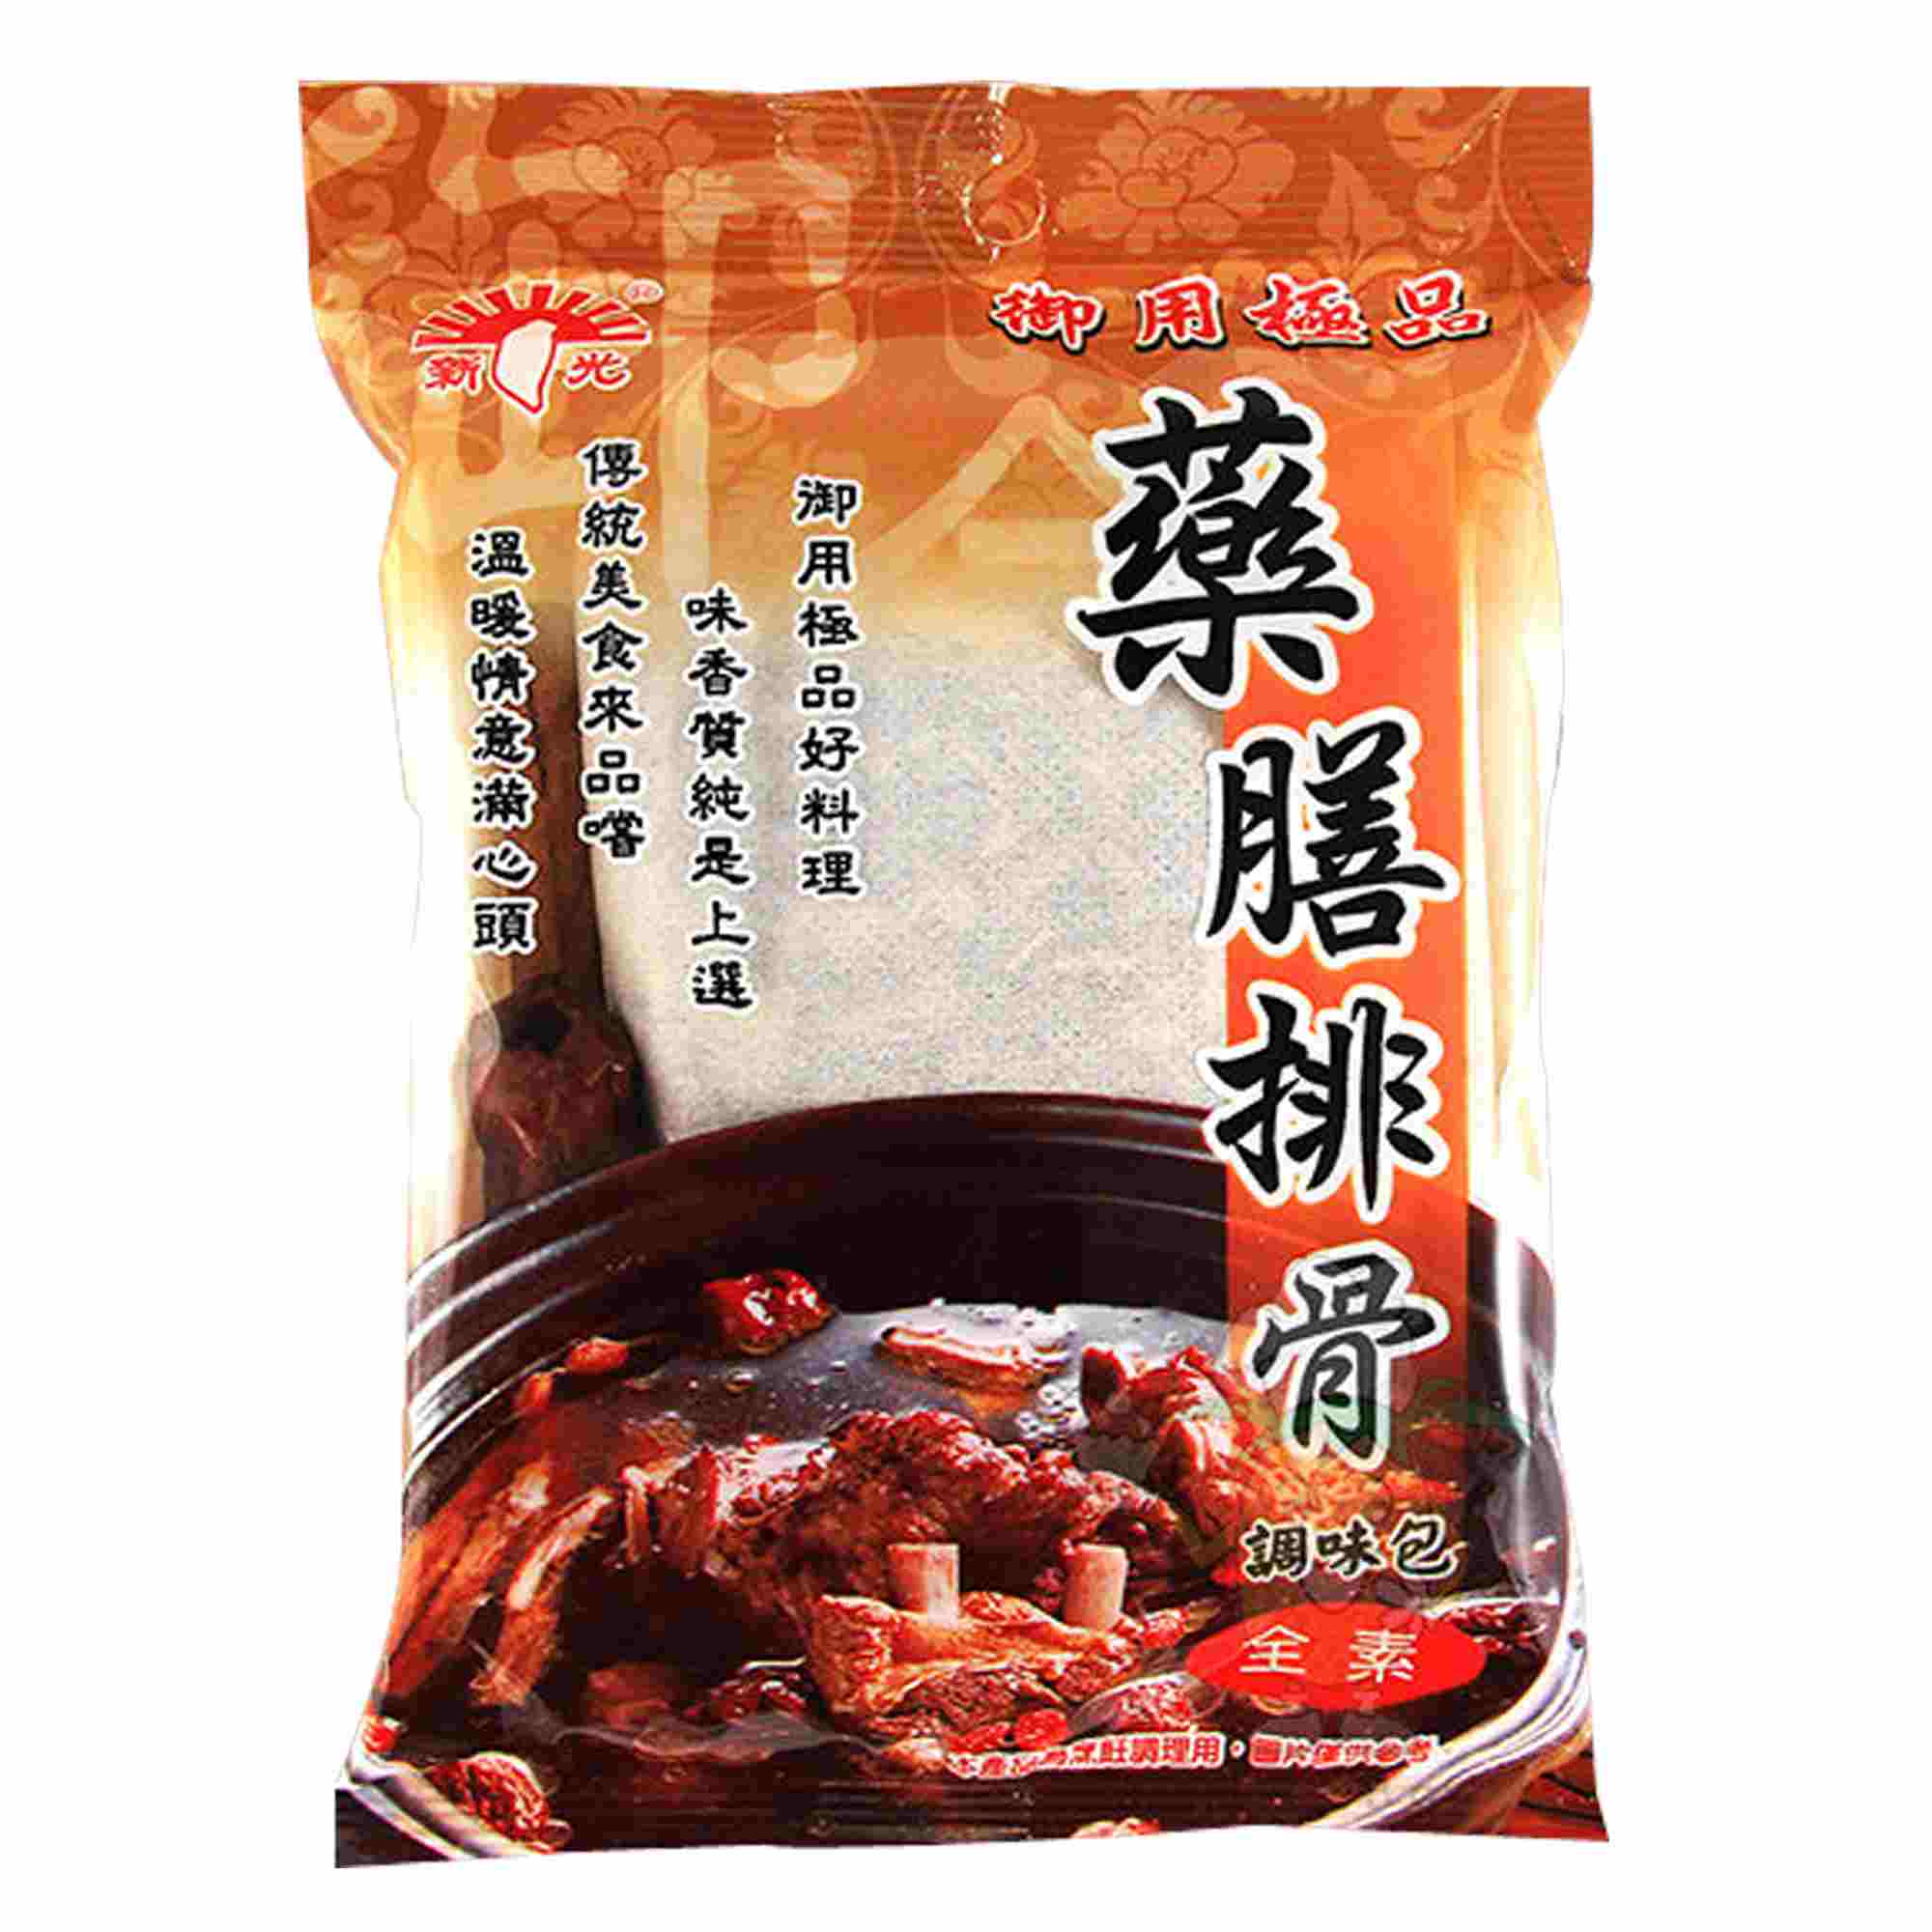 Image hsin kuang Herbal Rib Soup Yao Shan Pai Gu 新光 - 药膳排骨 60grams